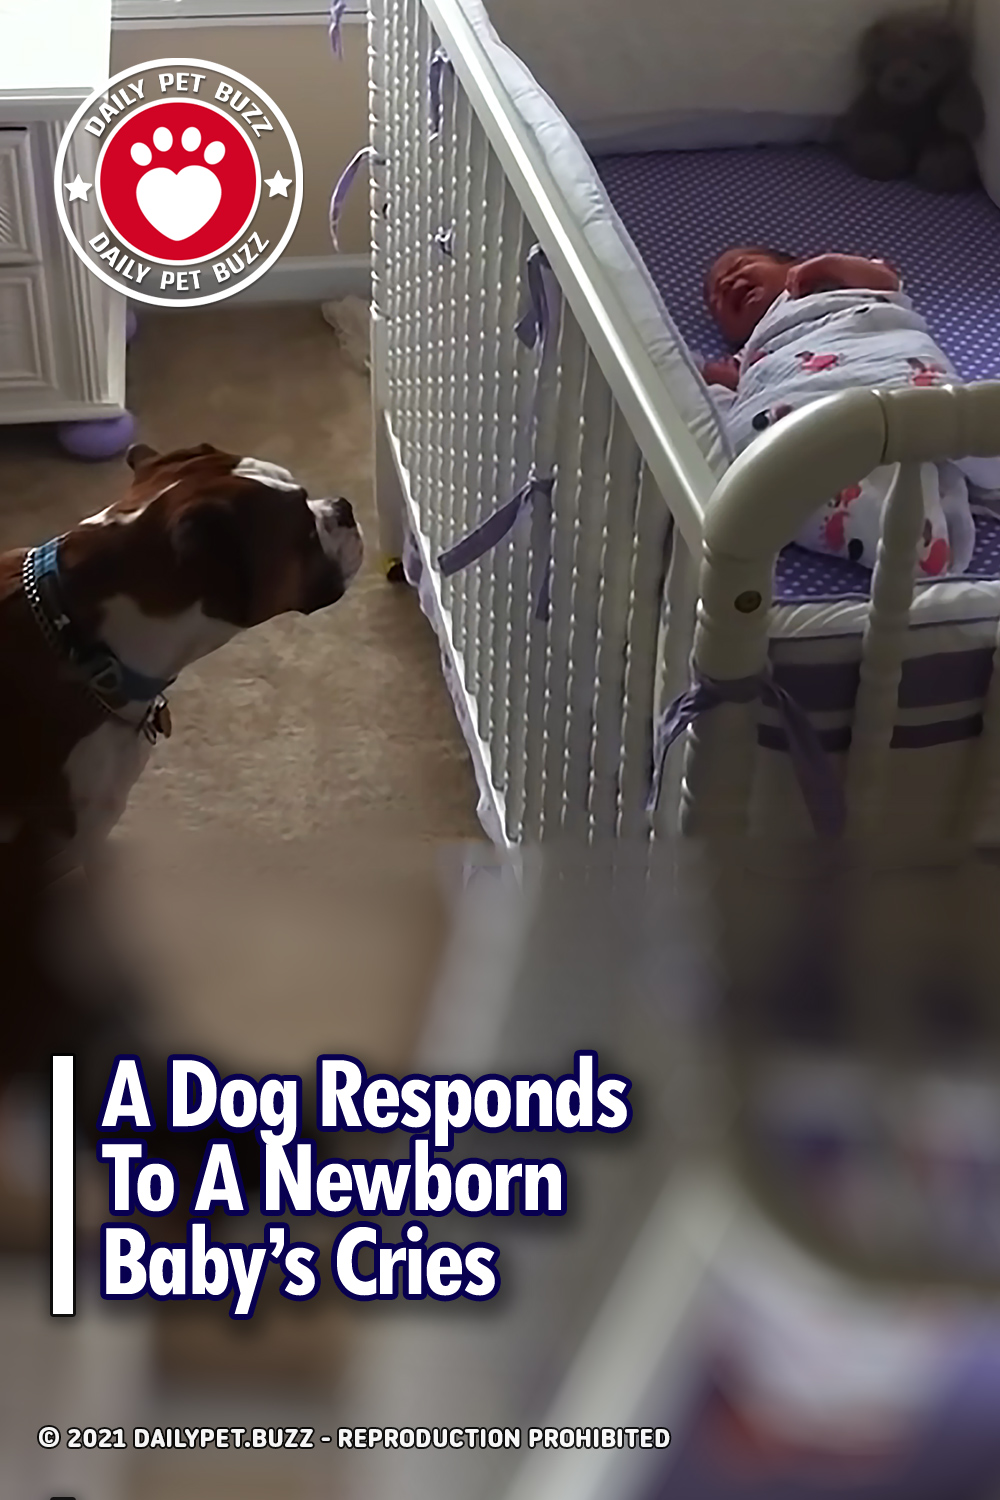 A Dog Responds To A Newborn Baby’s Cries